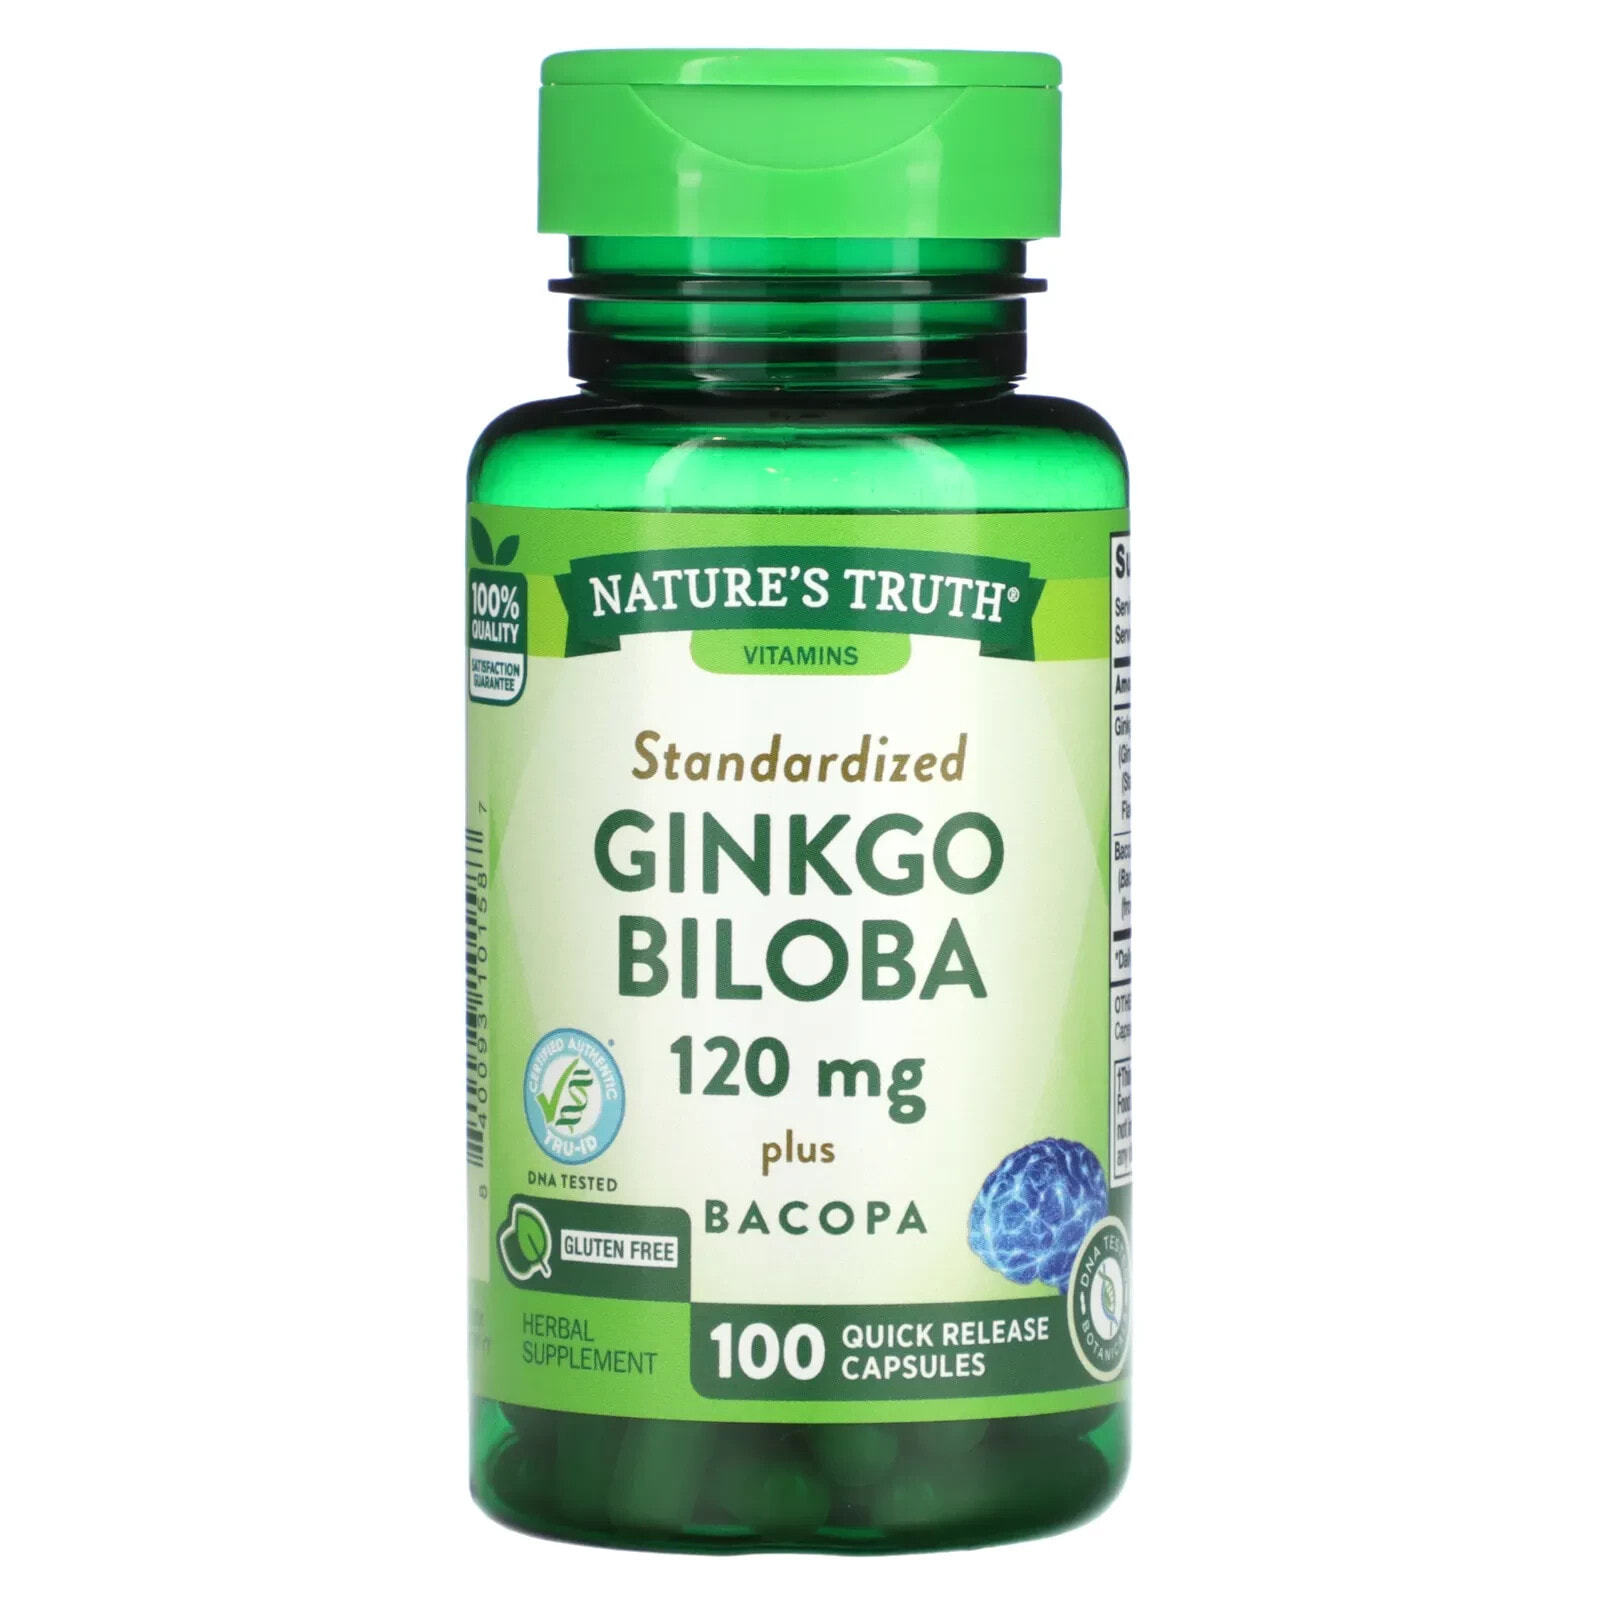 Nature's Truth, Ginkgo Biloba Plus Bacopa, 120 mg, 100 Quick Release Capsules